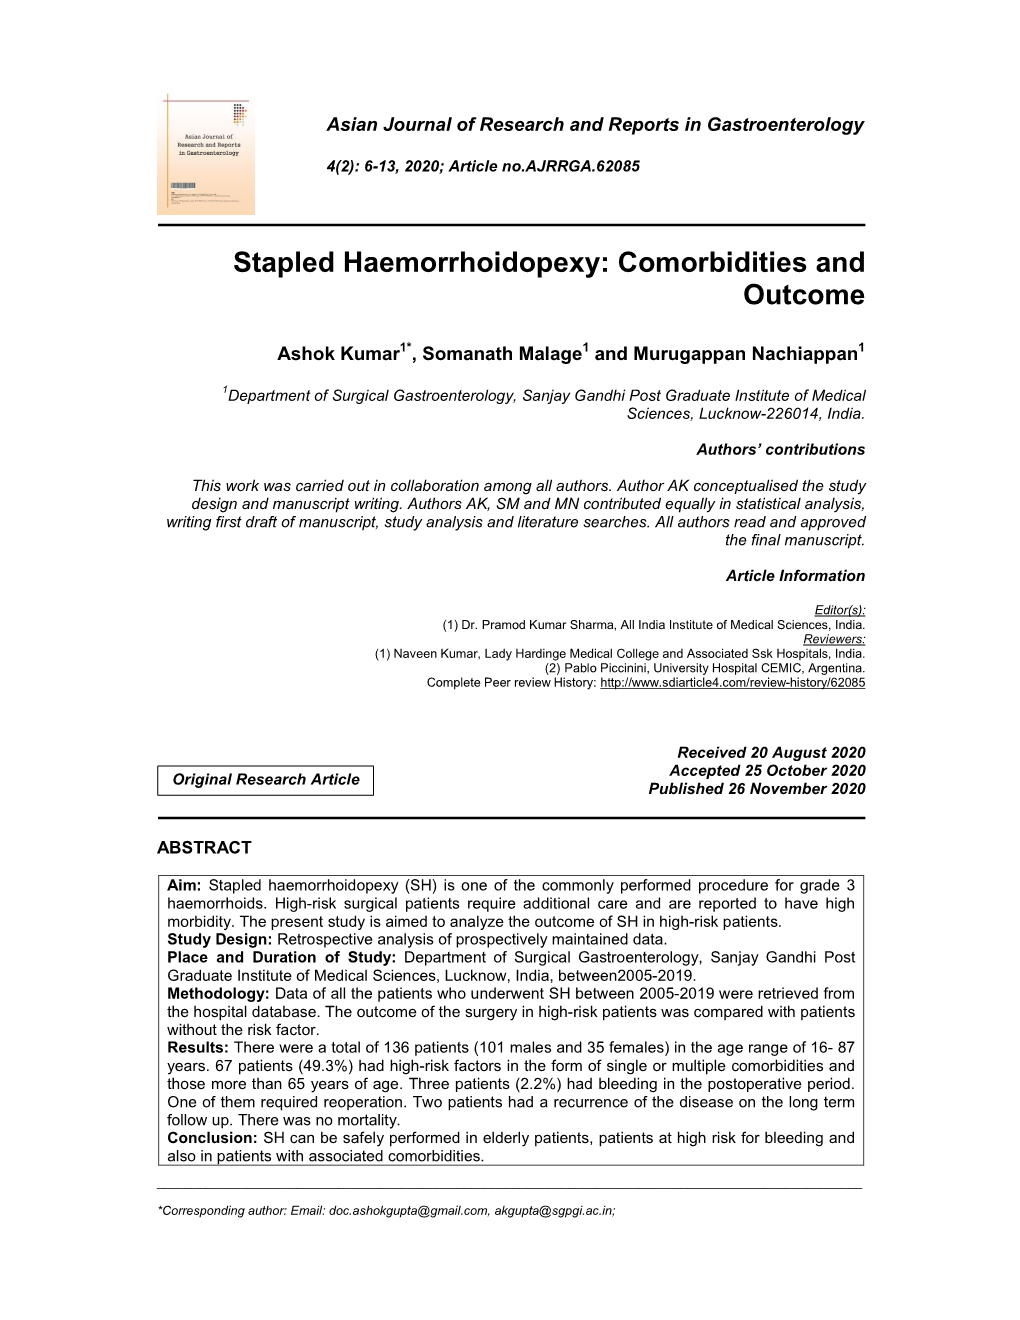 Stapled Haemorrhoidopexy: Comorbidities and Outcome